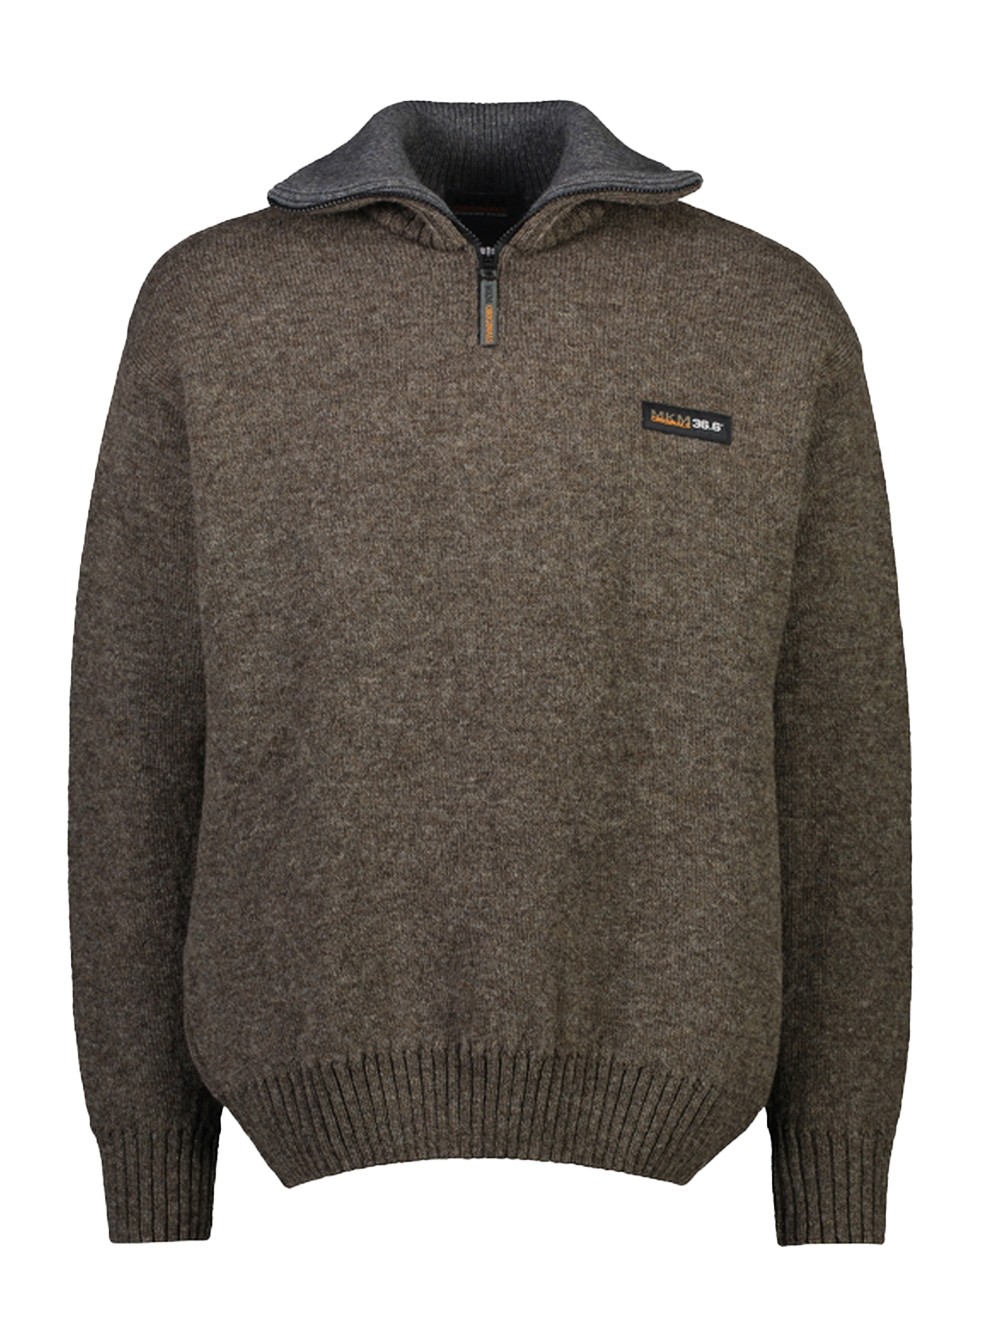 Buy Tasman 36.6 Zip and Collar Sweater - MKM logo in NZ | The Uniform ...